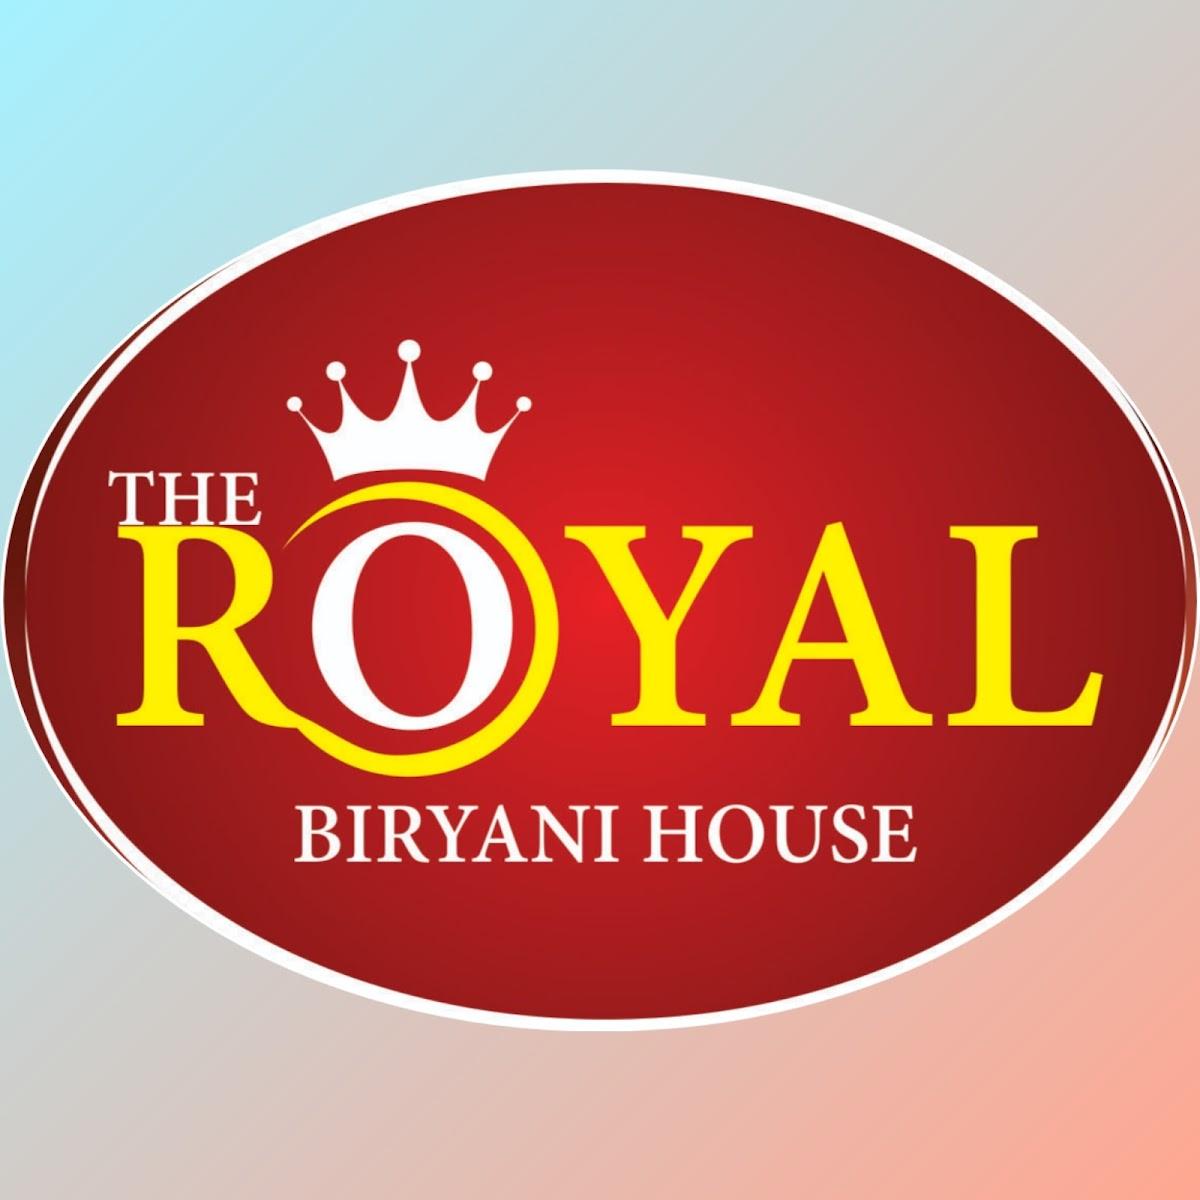 Zaika Biryani House menu card by syedmaaz on DeviantArt